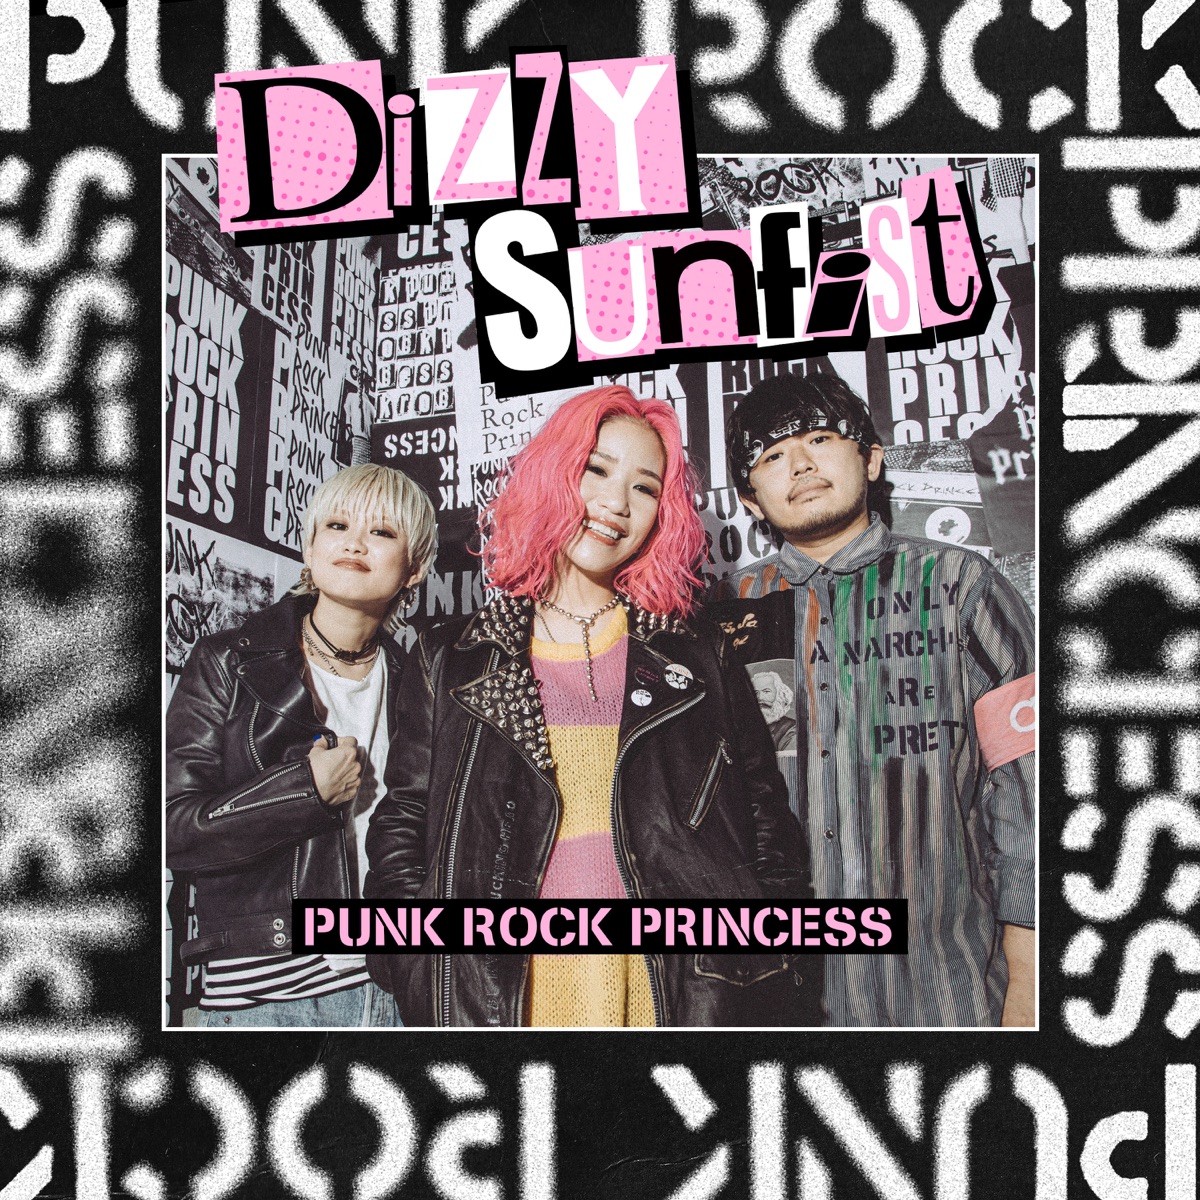 『Dizzy Sunfist - Going Phycho』収録の『PUNK ROCK PRINCESS』ジャケット